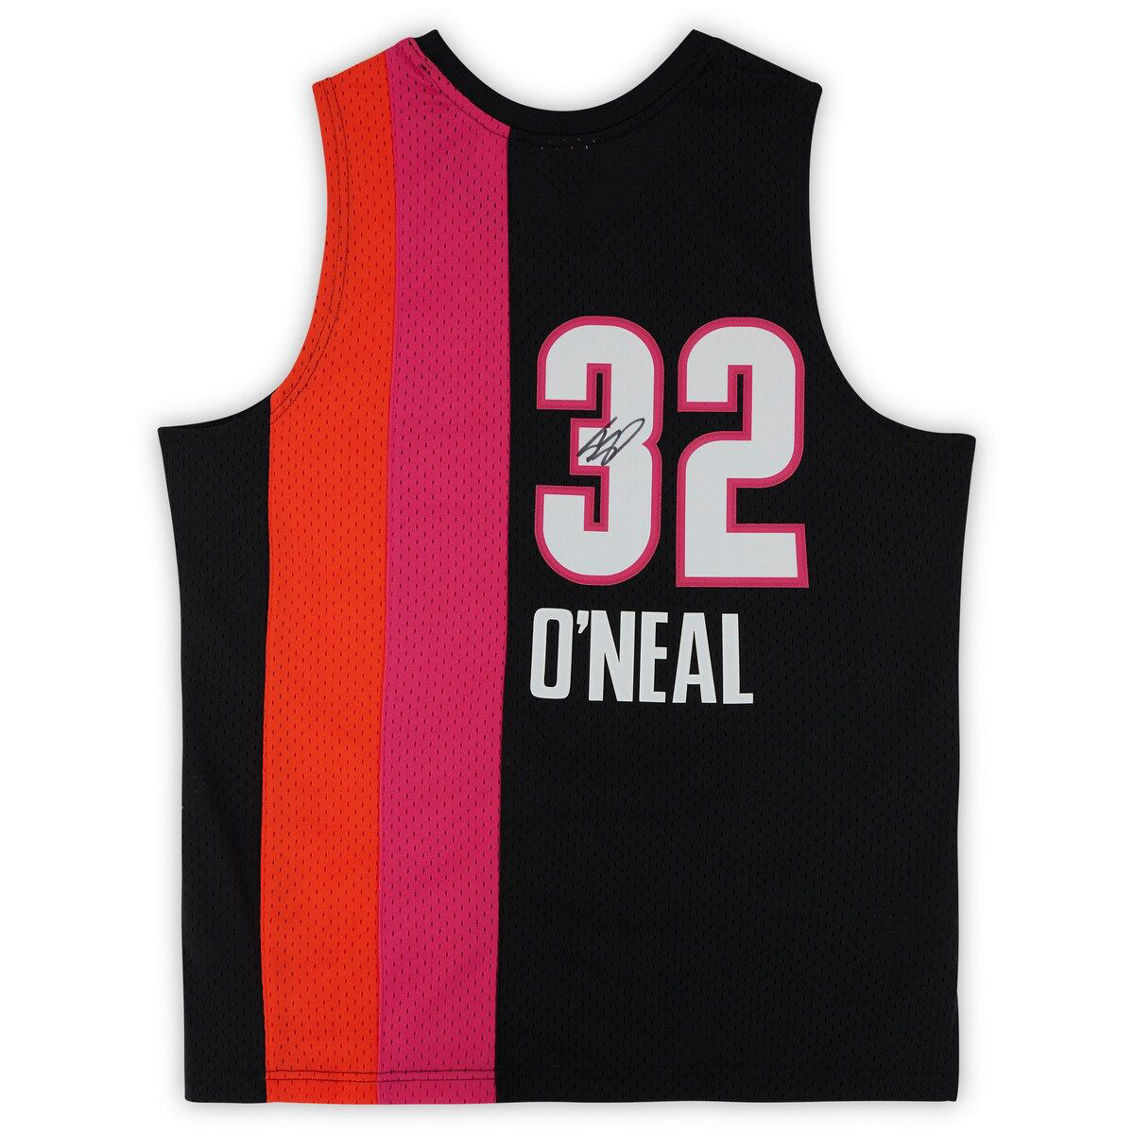 Fanatics Authentic Shaquille O'Neal Miami Heat Autographed Alternate 2005-06 Swingman Jersey - Image 3 of 4